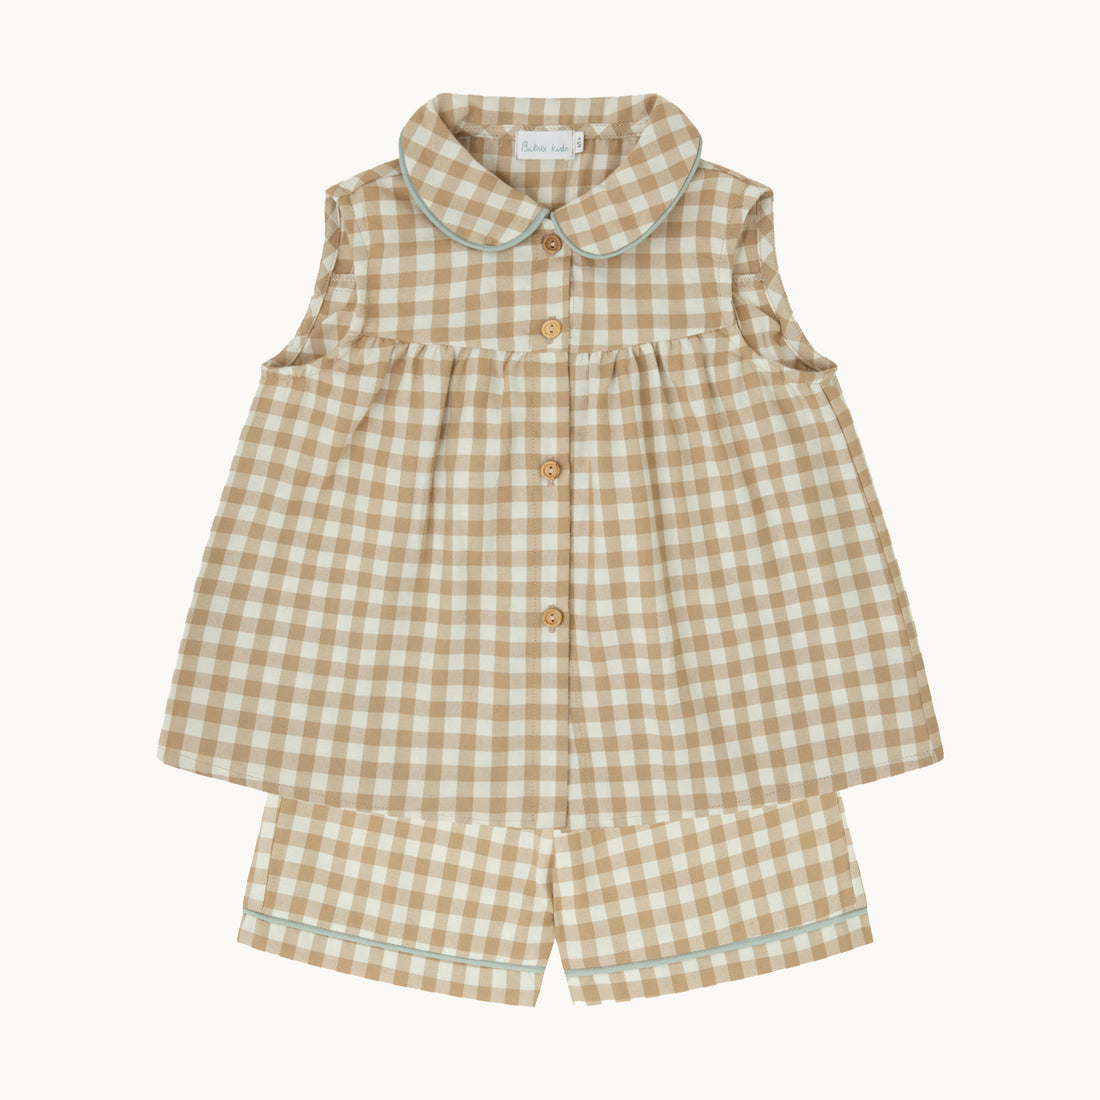 Pijama niña - Vichy beige